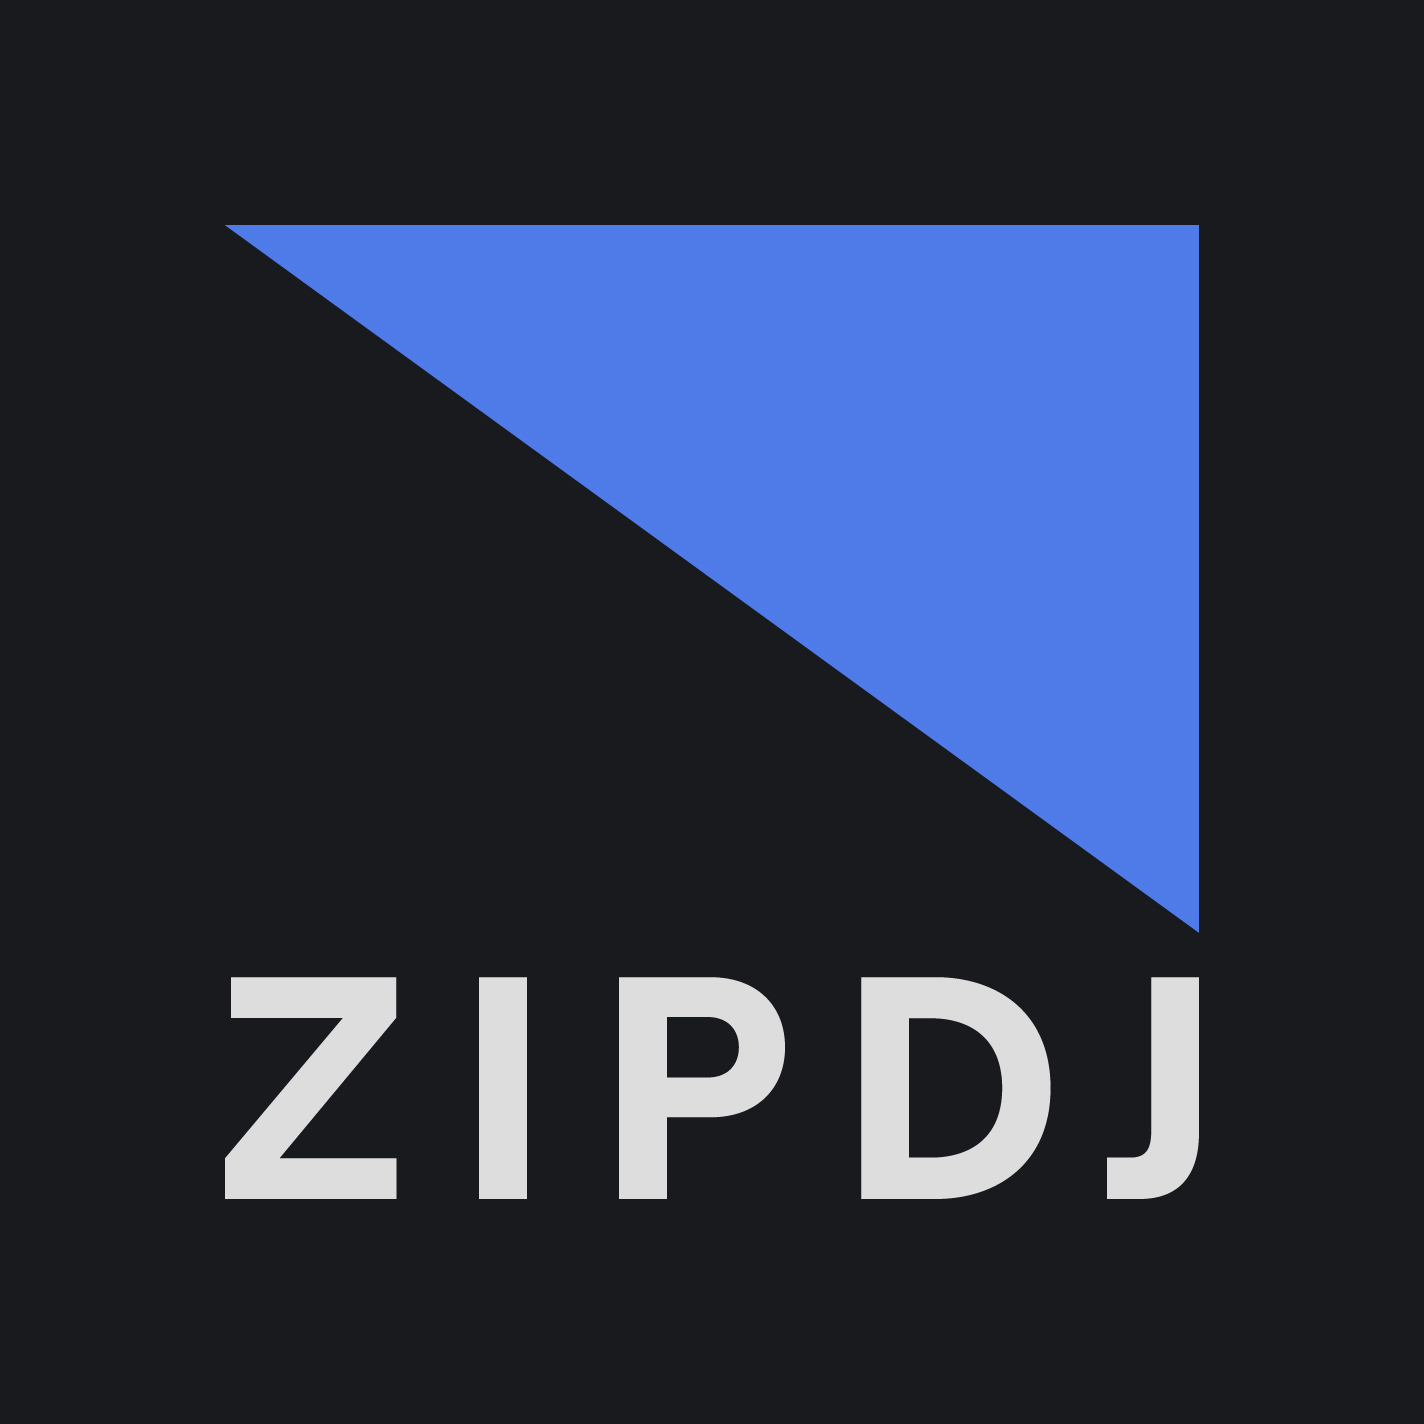 (c) Zipdj.com